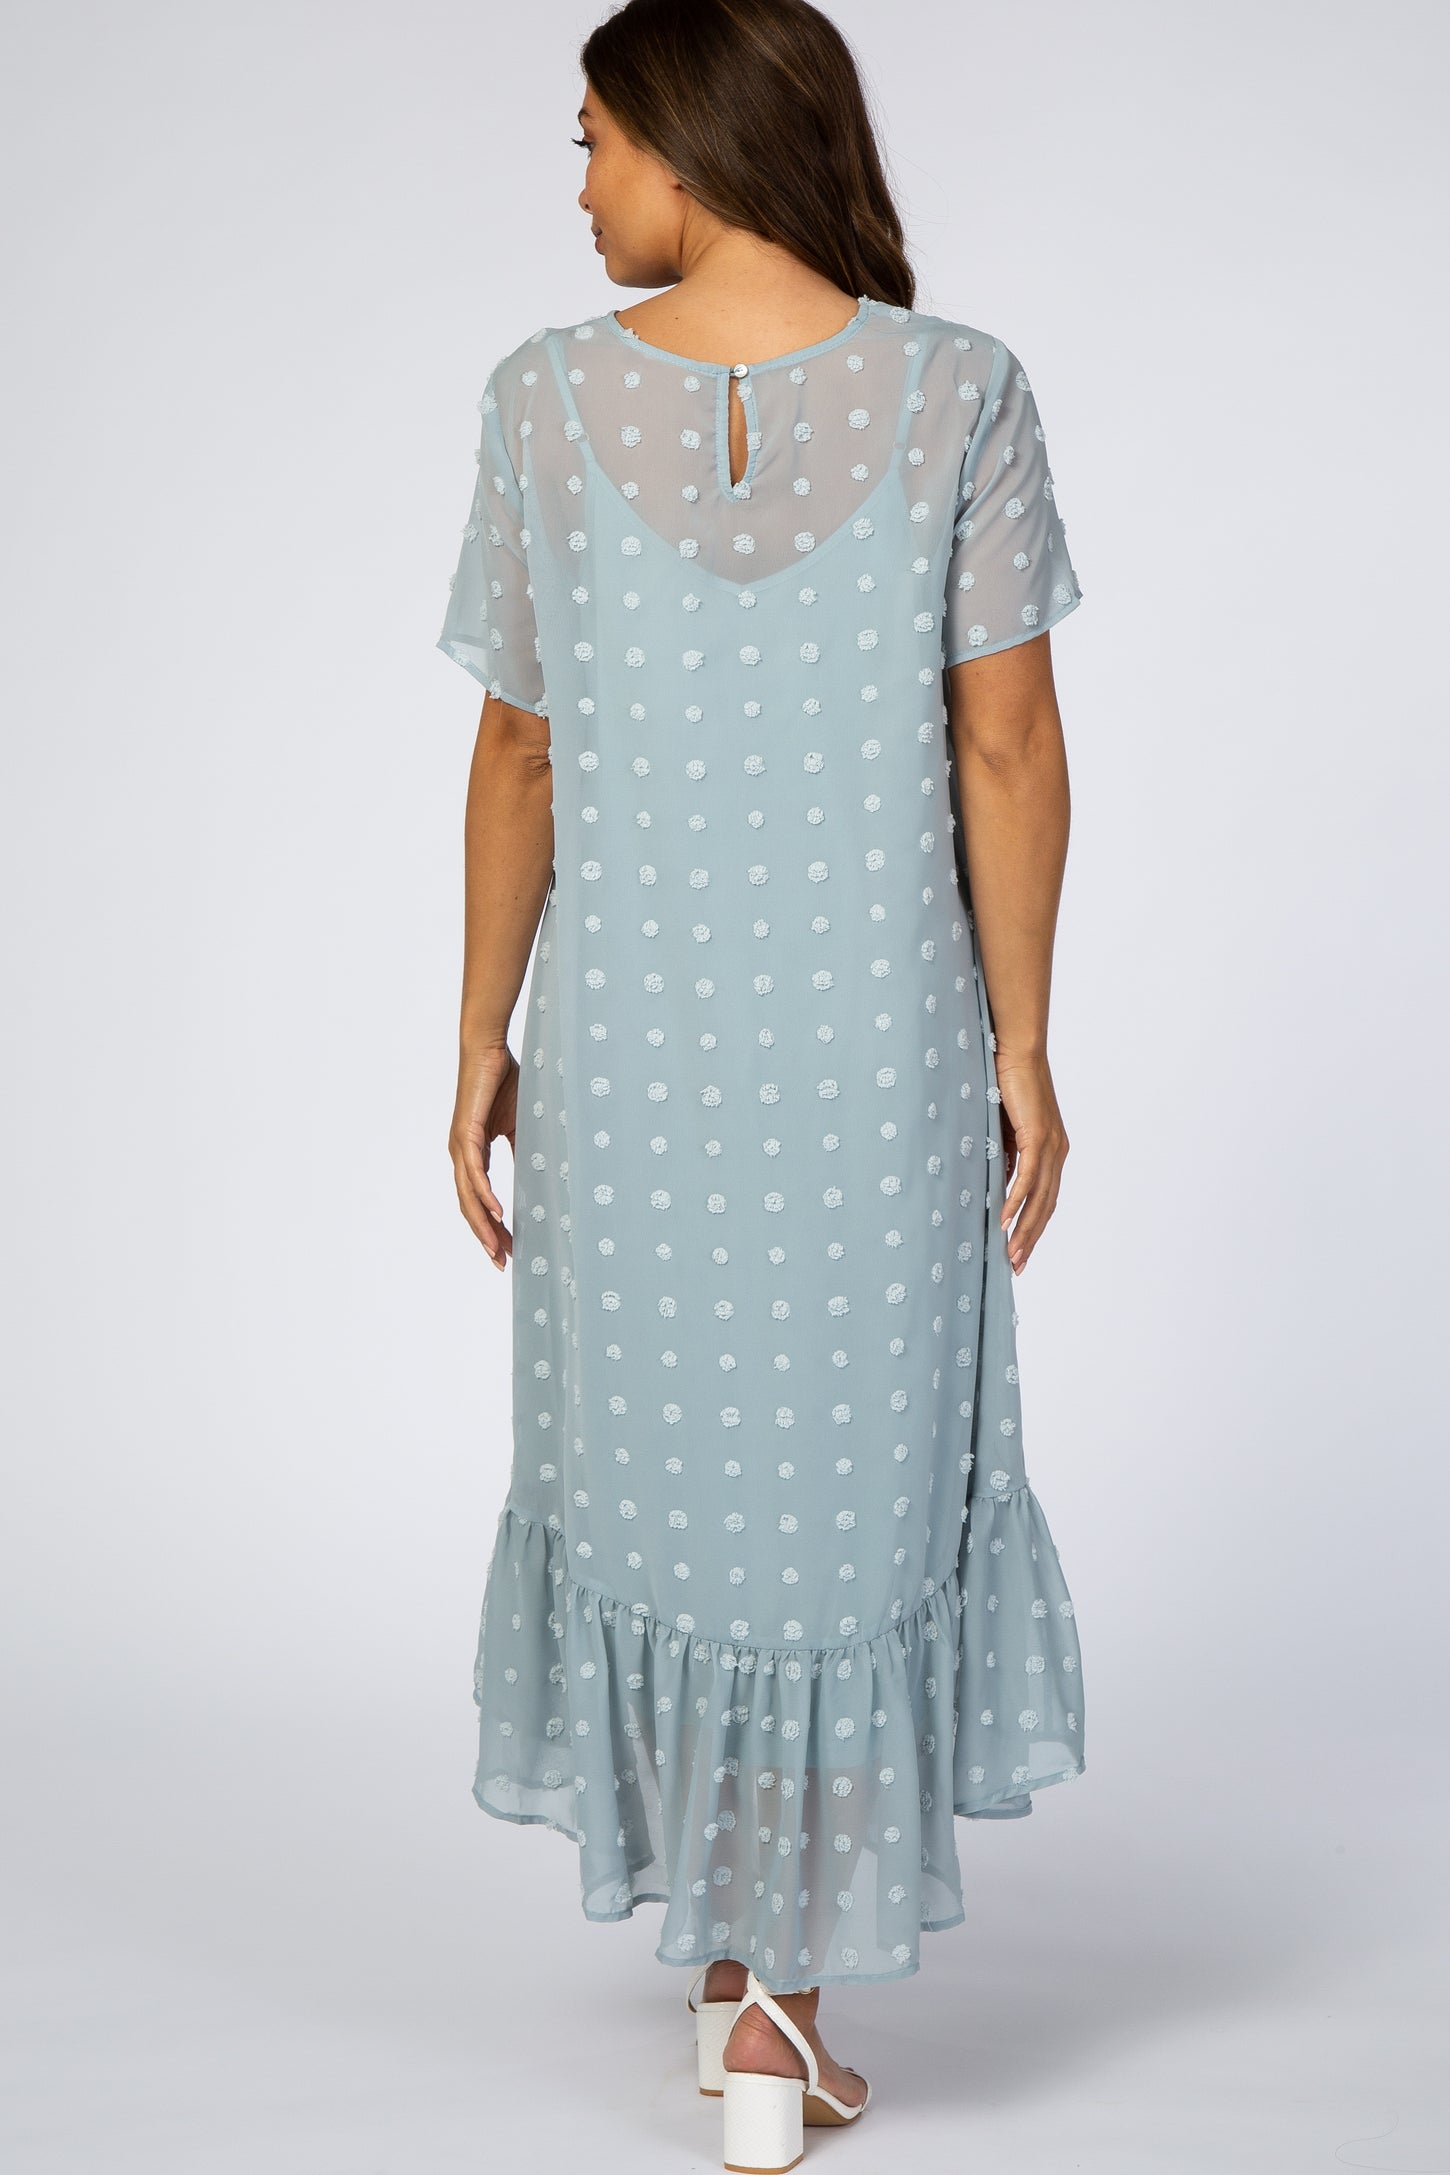 Light Blue Textured High-Low Ruffle Hem Maternity Midi Dress